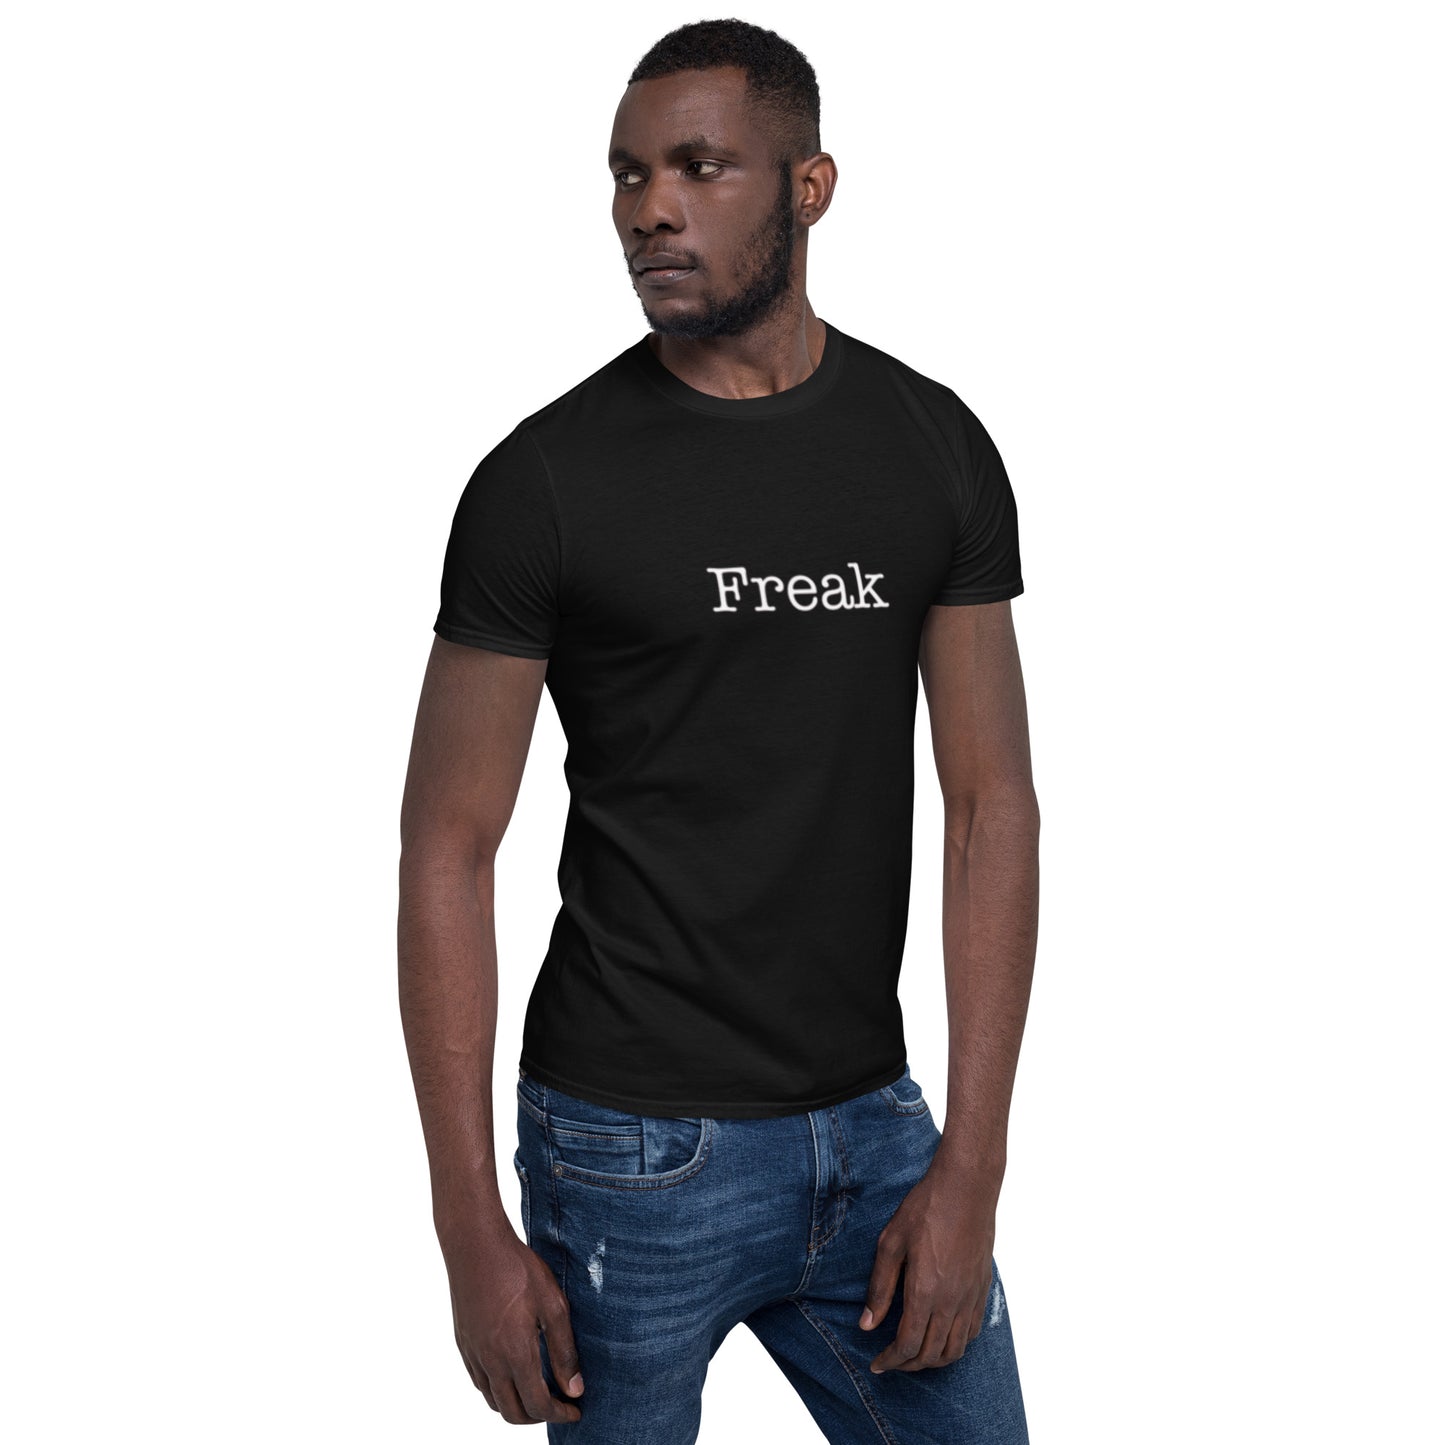 Freak (Black) Short-Sleeve Unisex T-Shirt